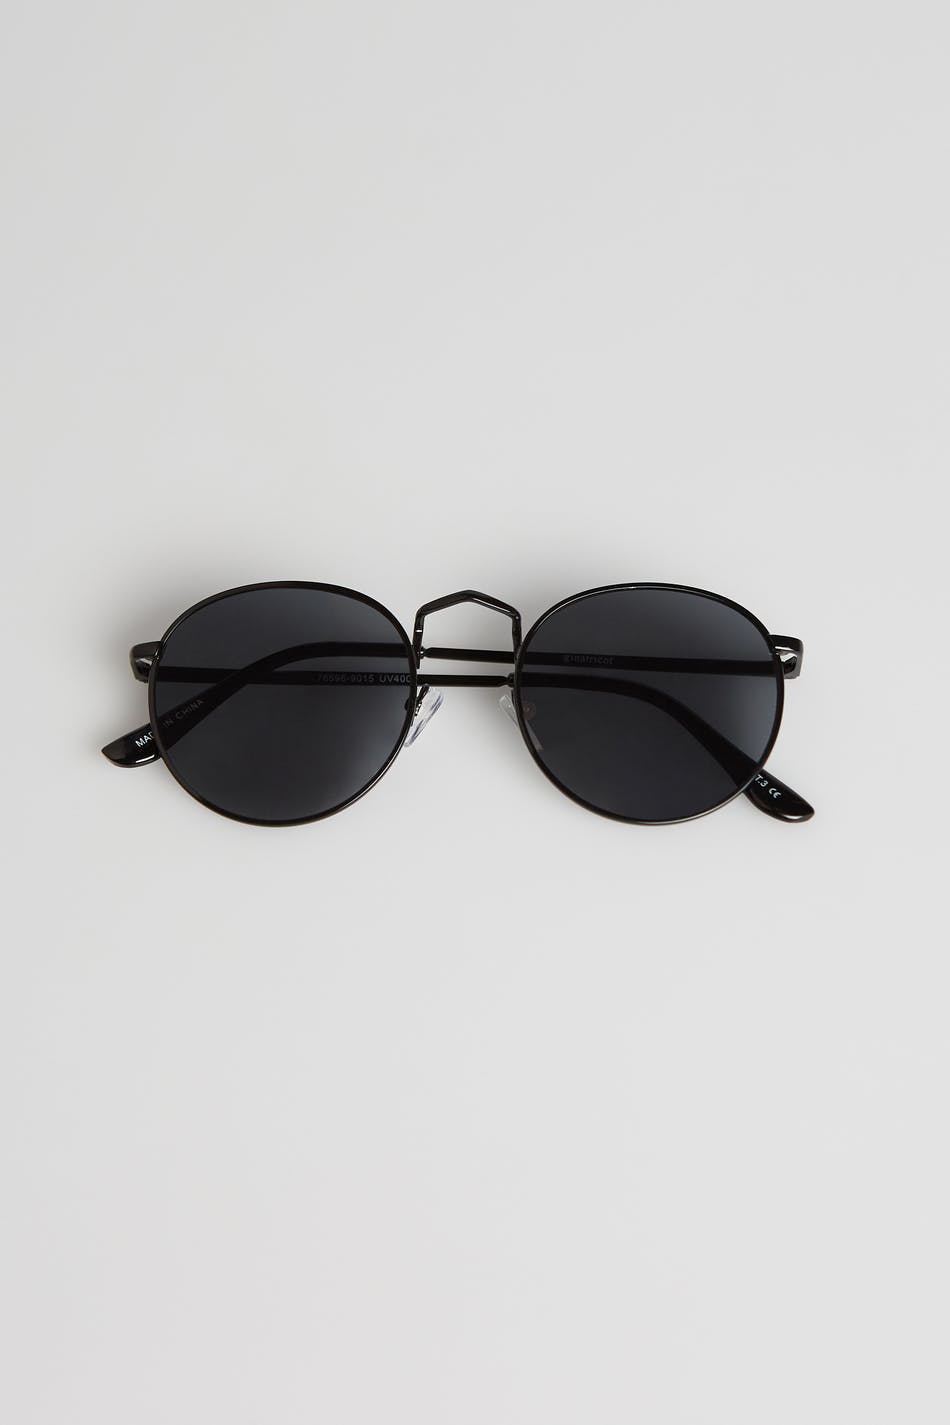 Gina Tricot Lucy sunglasses ONESZ  Black/black